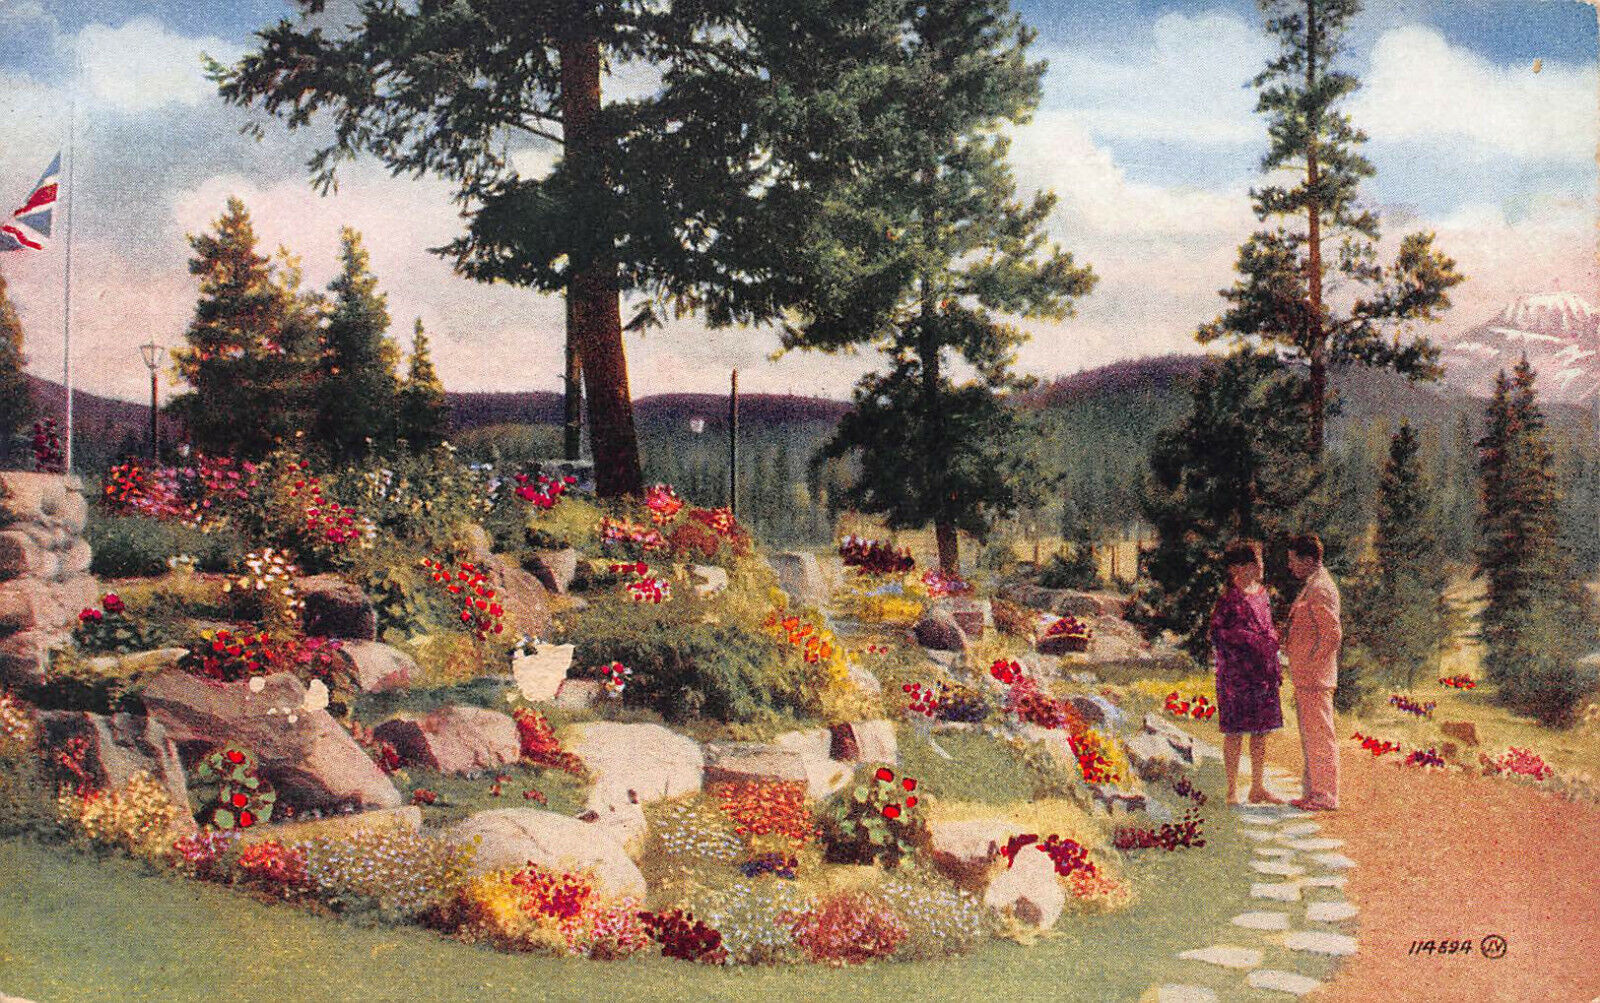 Rock Garden, Jasper Park Lodge, Jasper, Alberta, Canada, early postcard, unused 